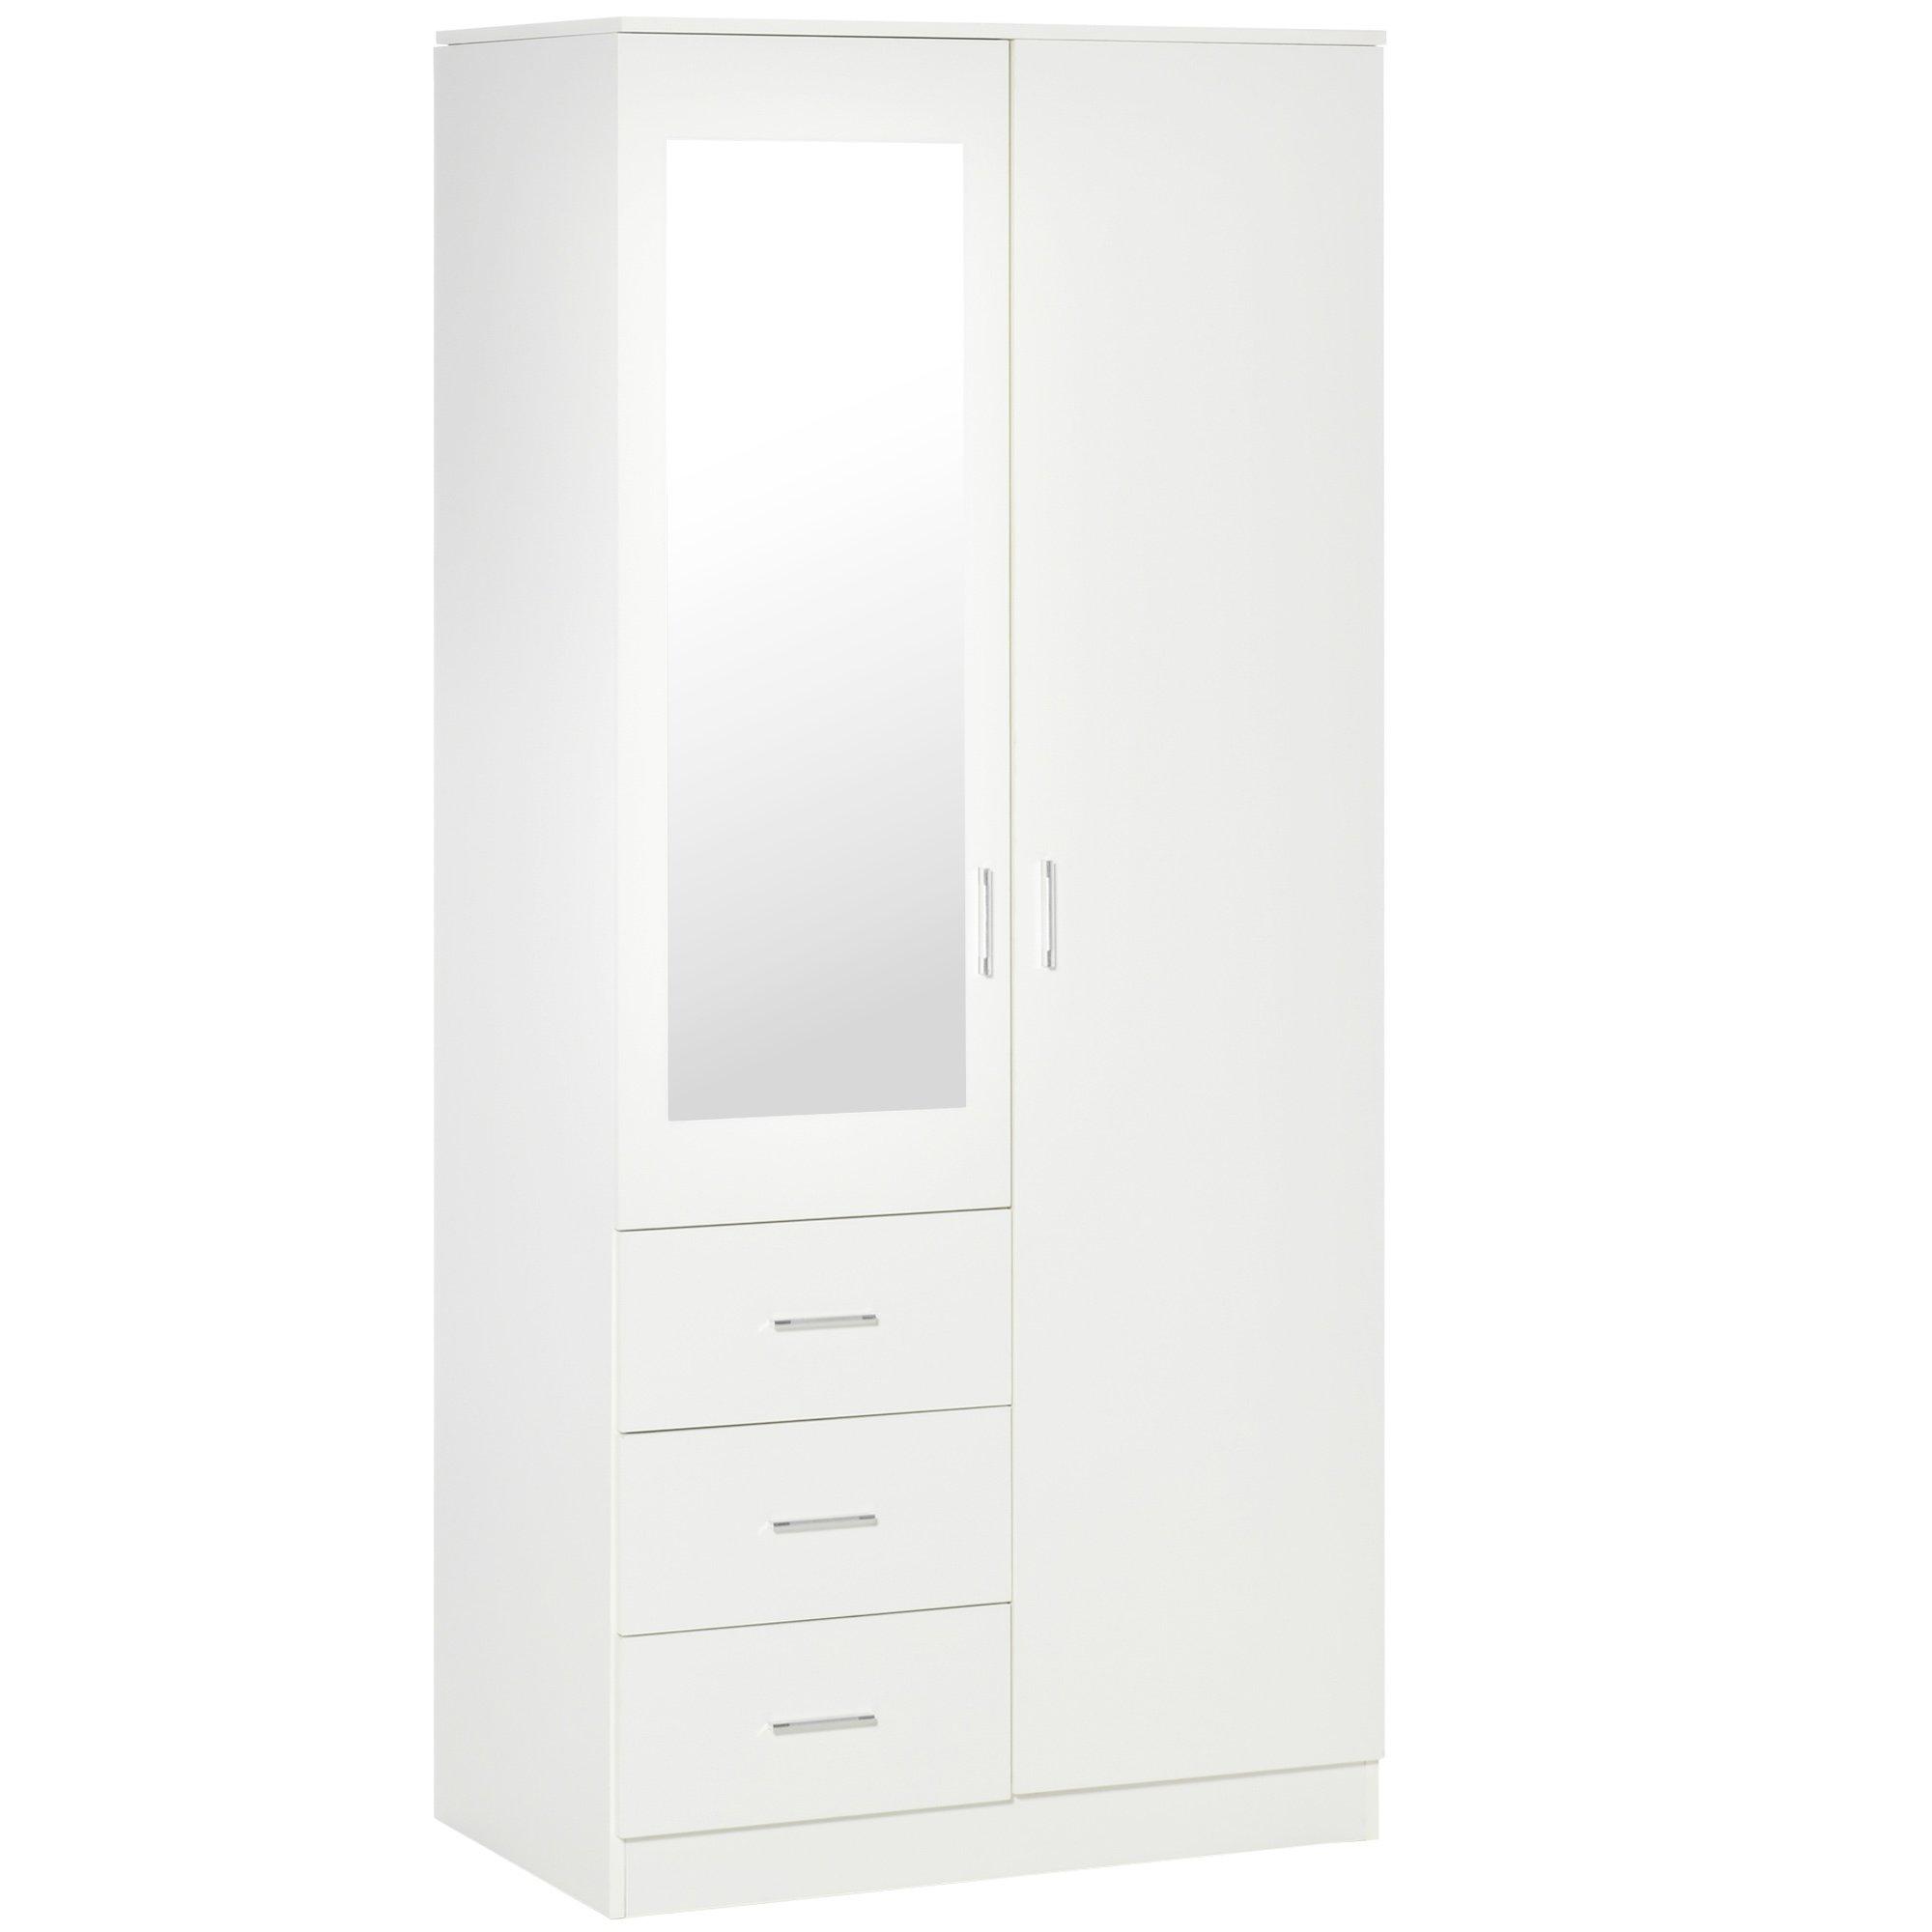 2 Door Wardrobe Adjustable Shelf 3 Drawers Mirror Home Storage 180cm